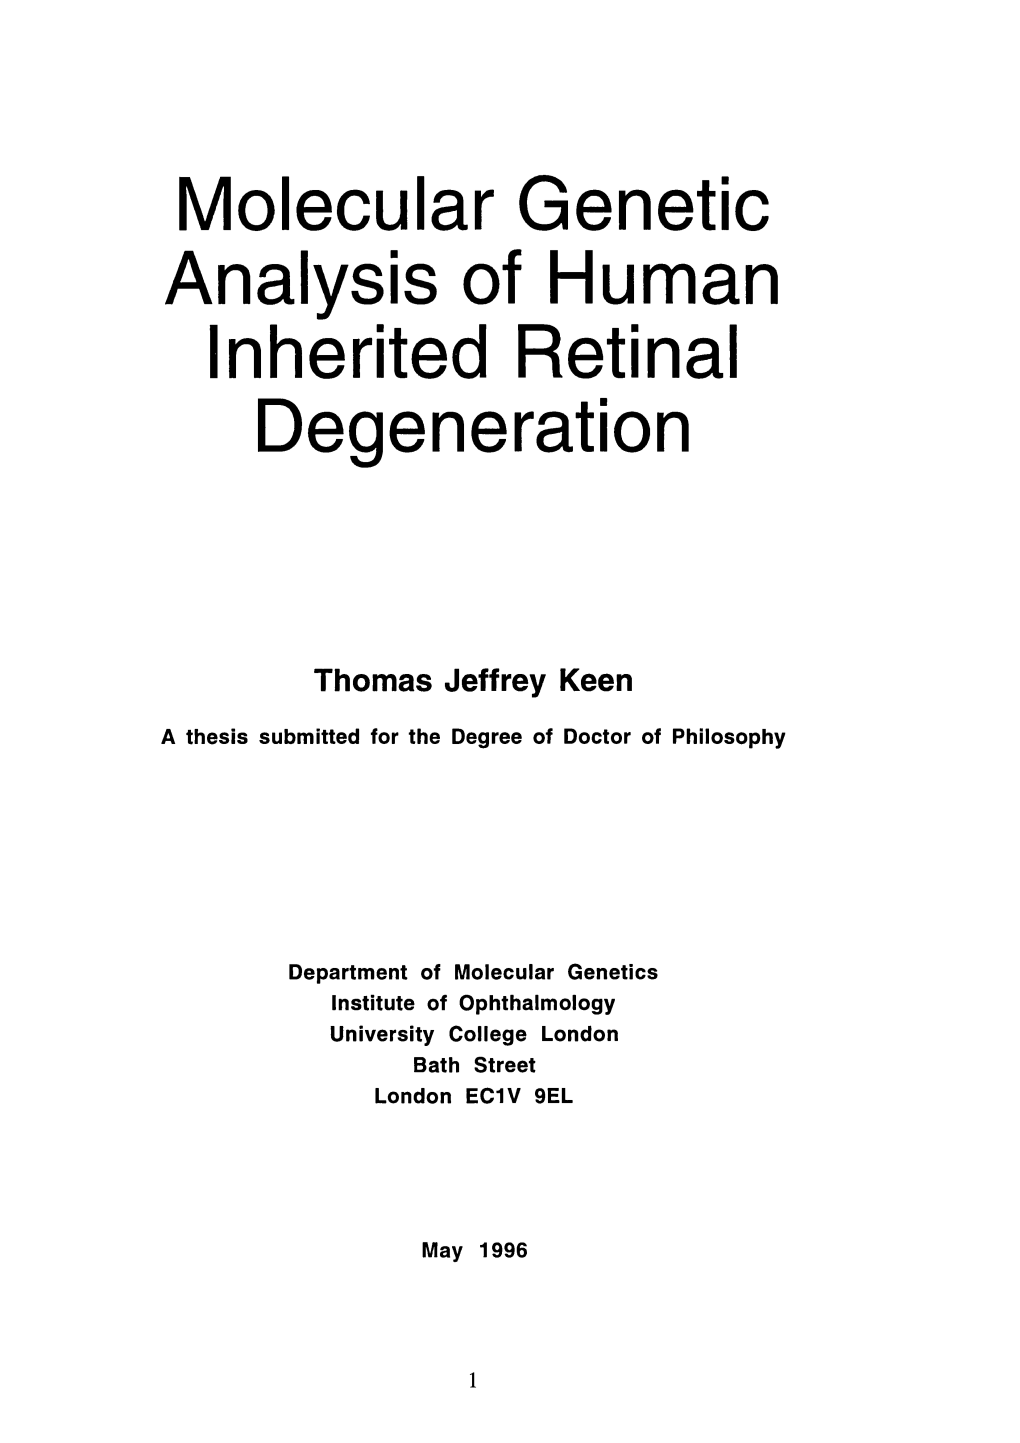 Molecular Genetic Analysis of Human Inherited Retinal Degeneration